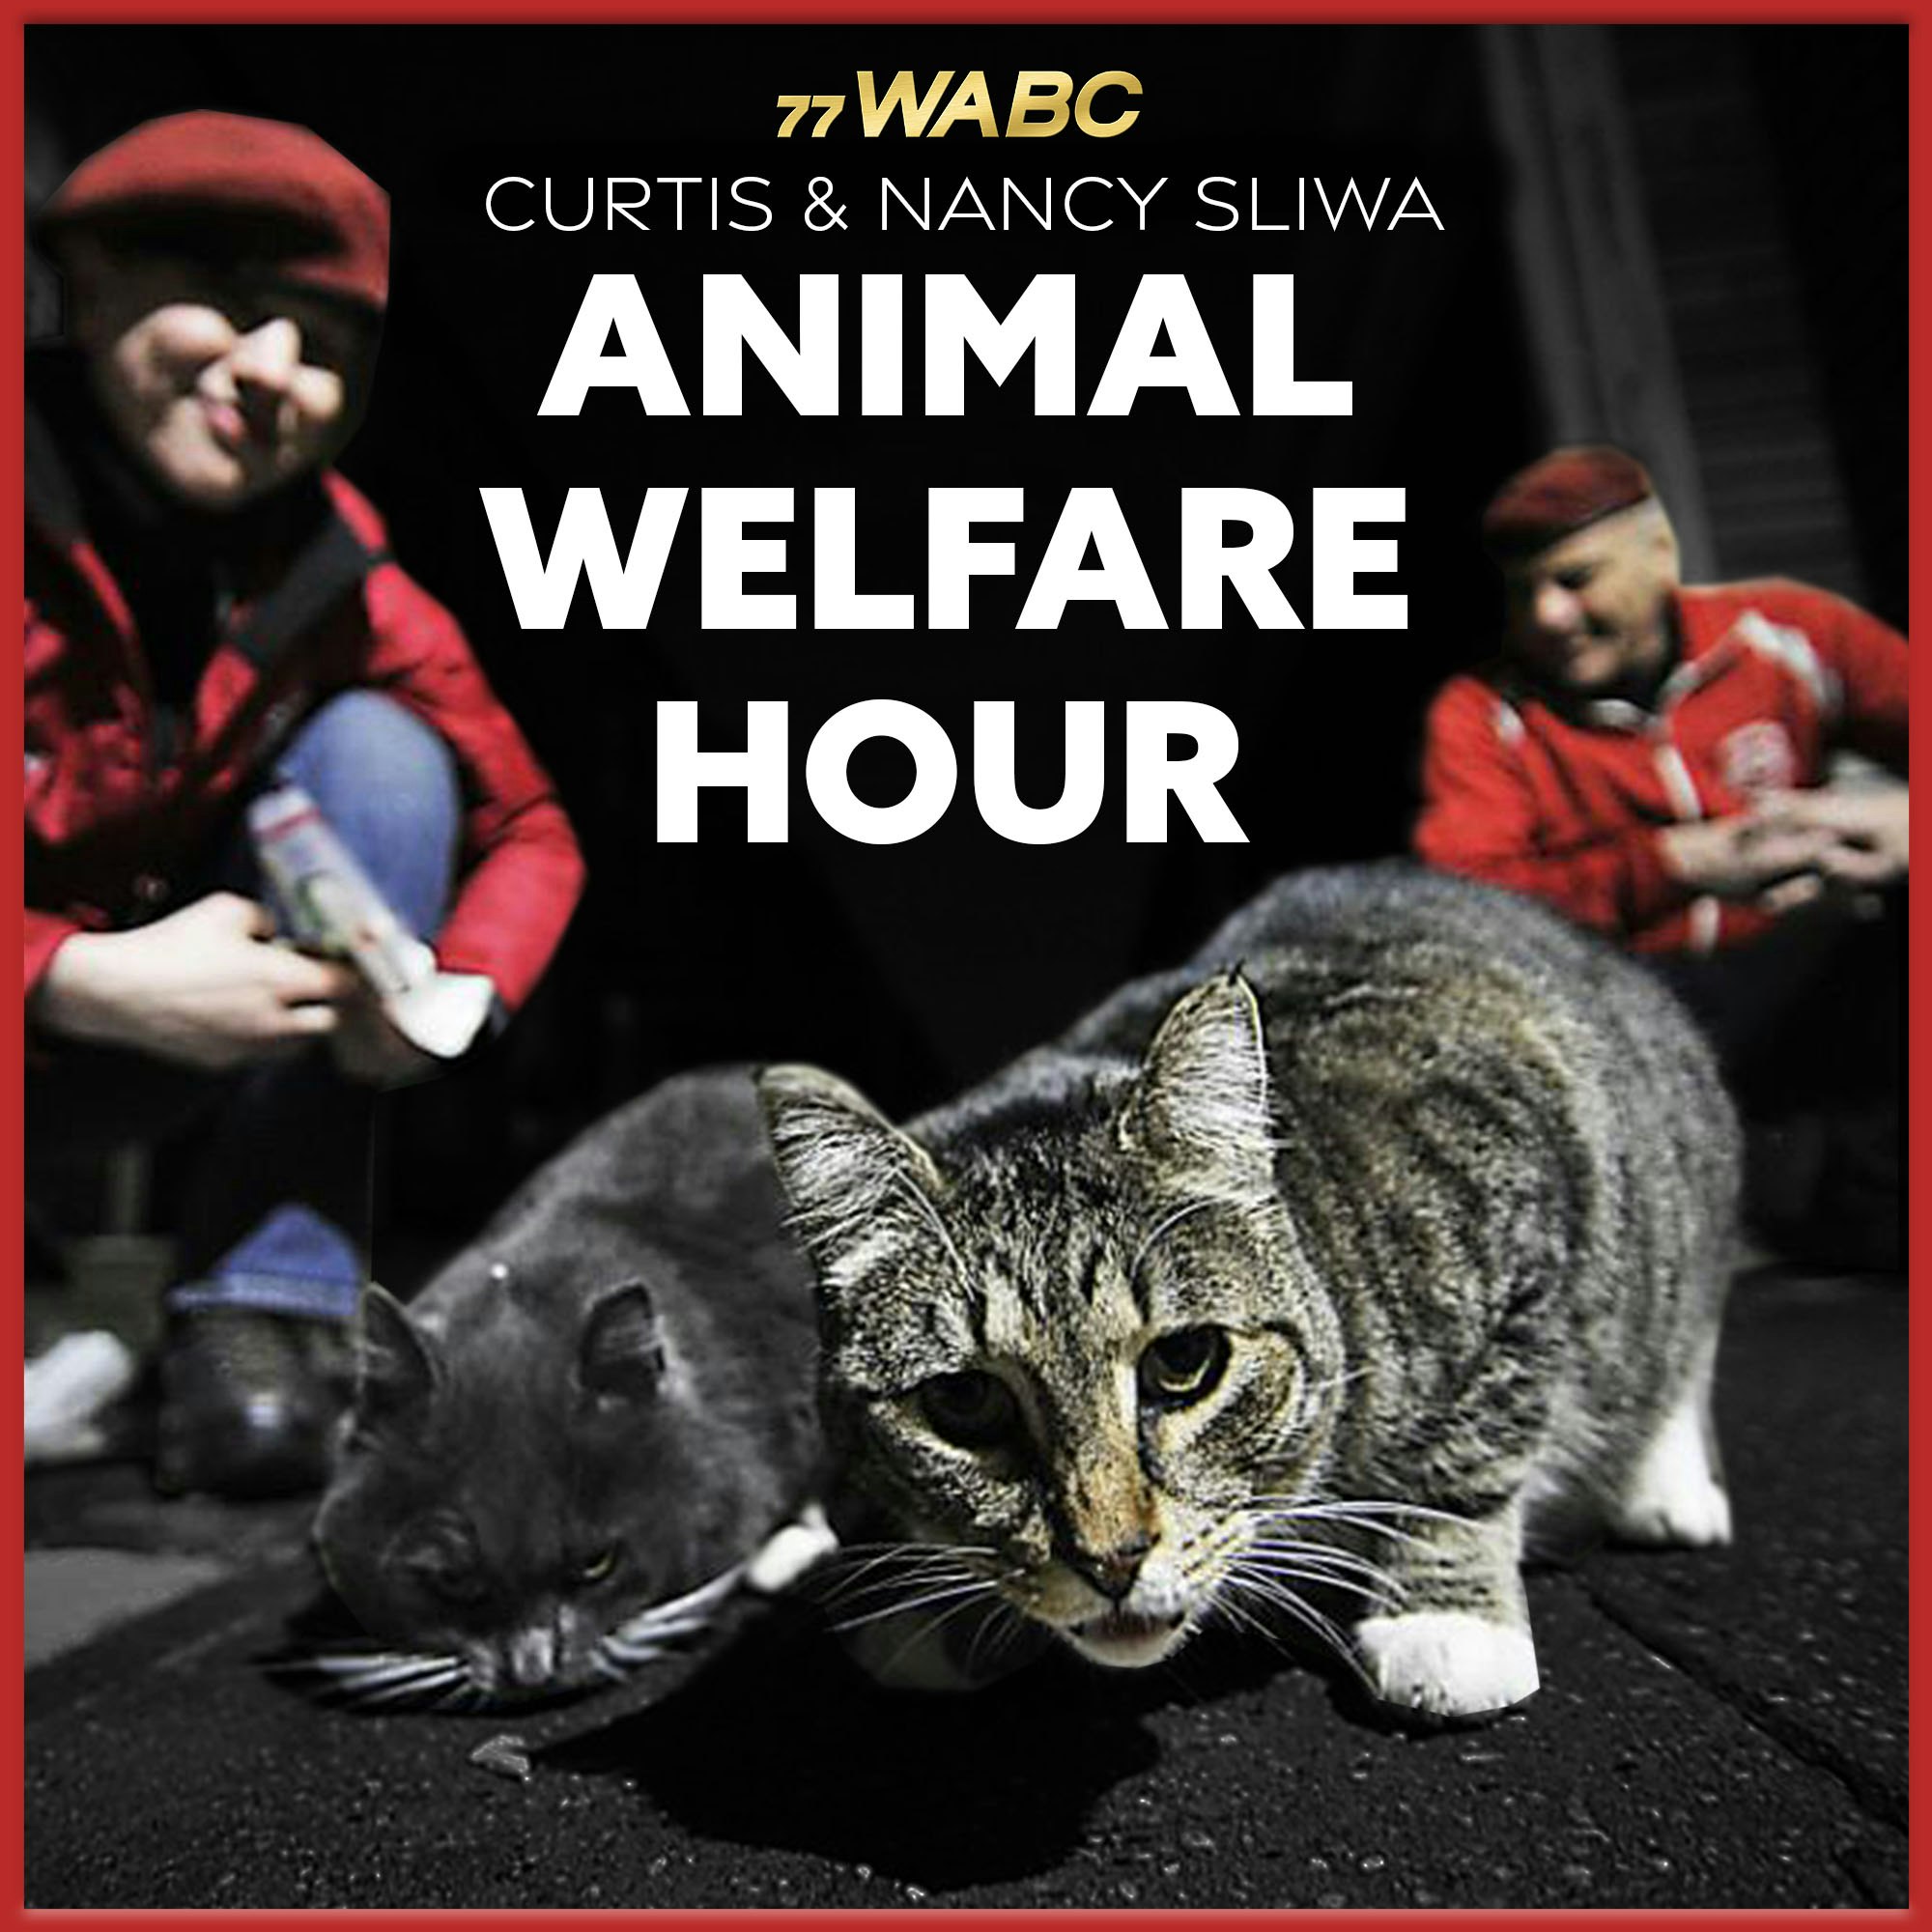 Curtis & Nancy Sliwa's Animal Welfare Hour